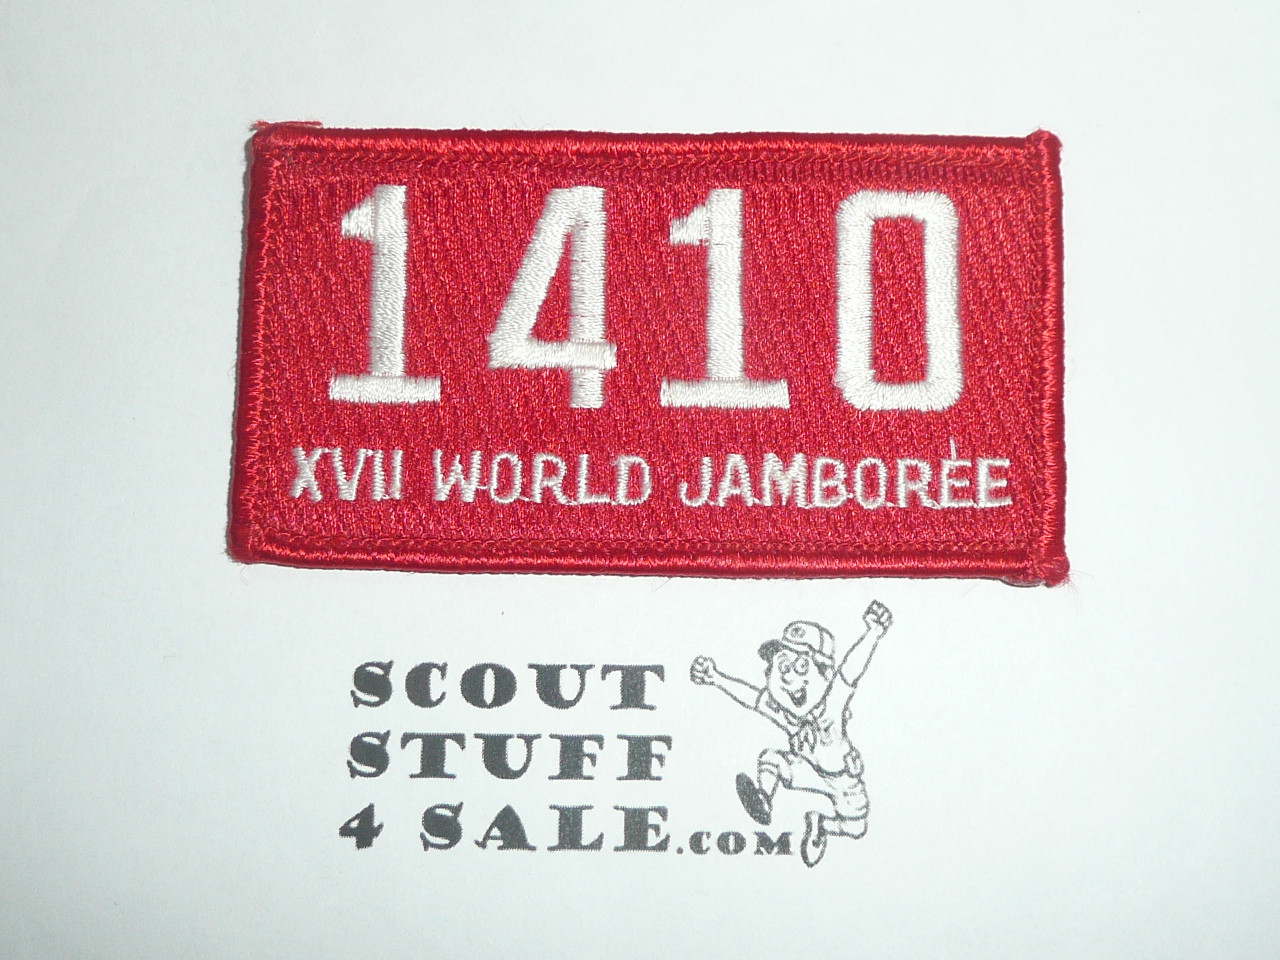 1991 World Jamboree JSP - Western Los Angeles County Council troop number 1410